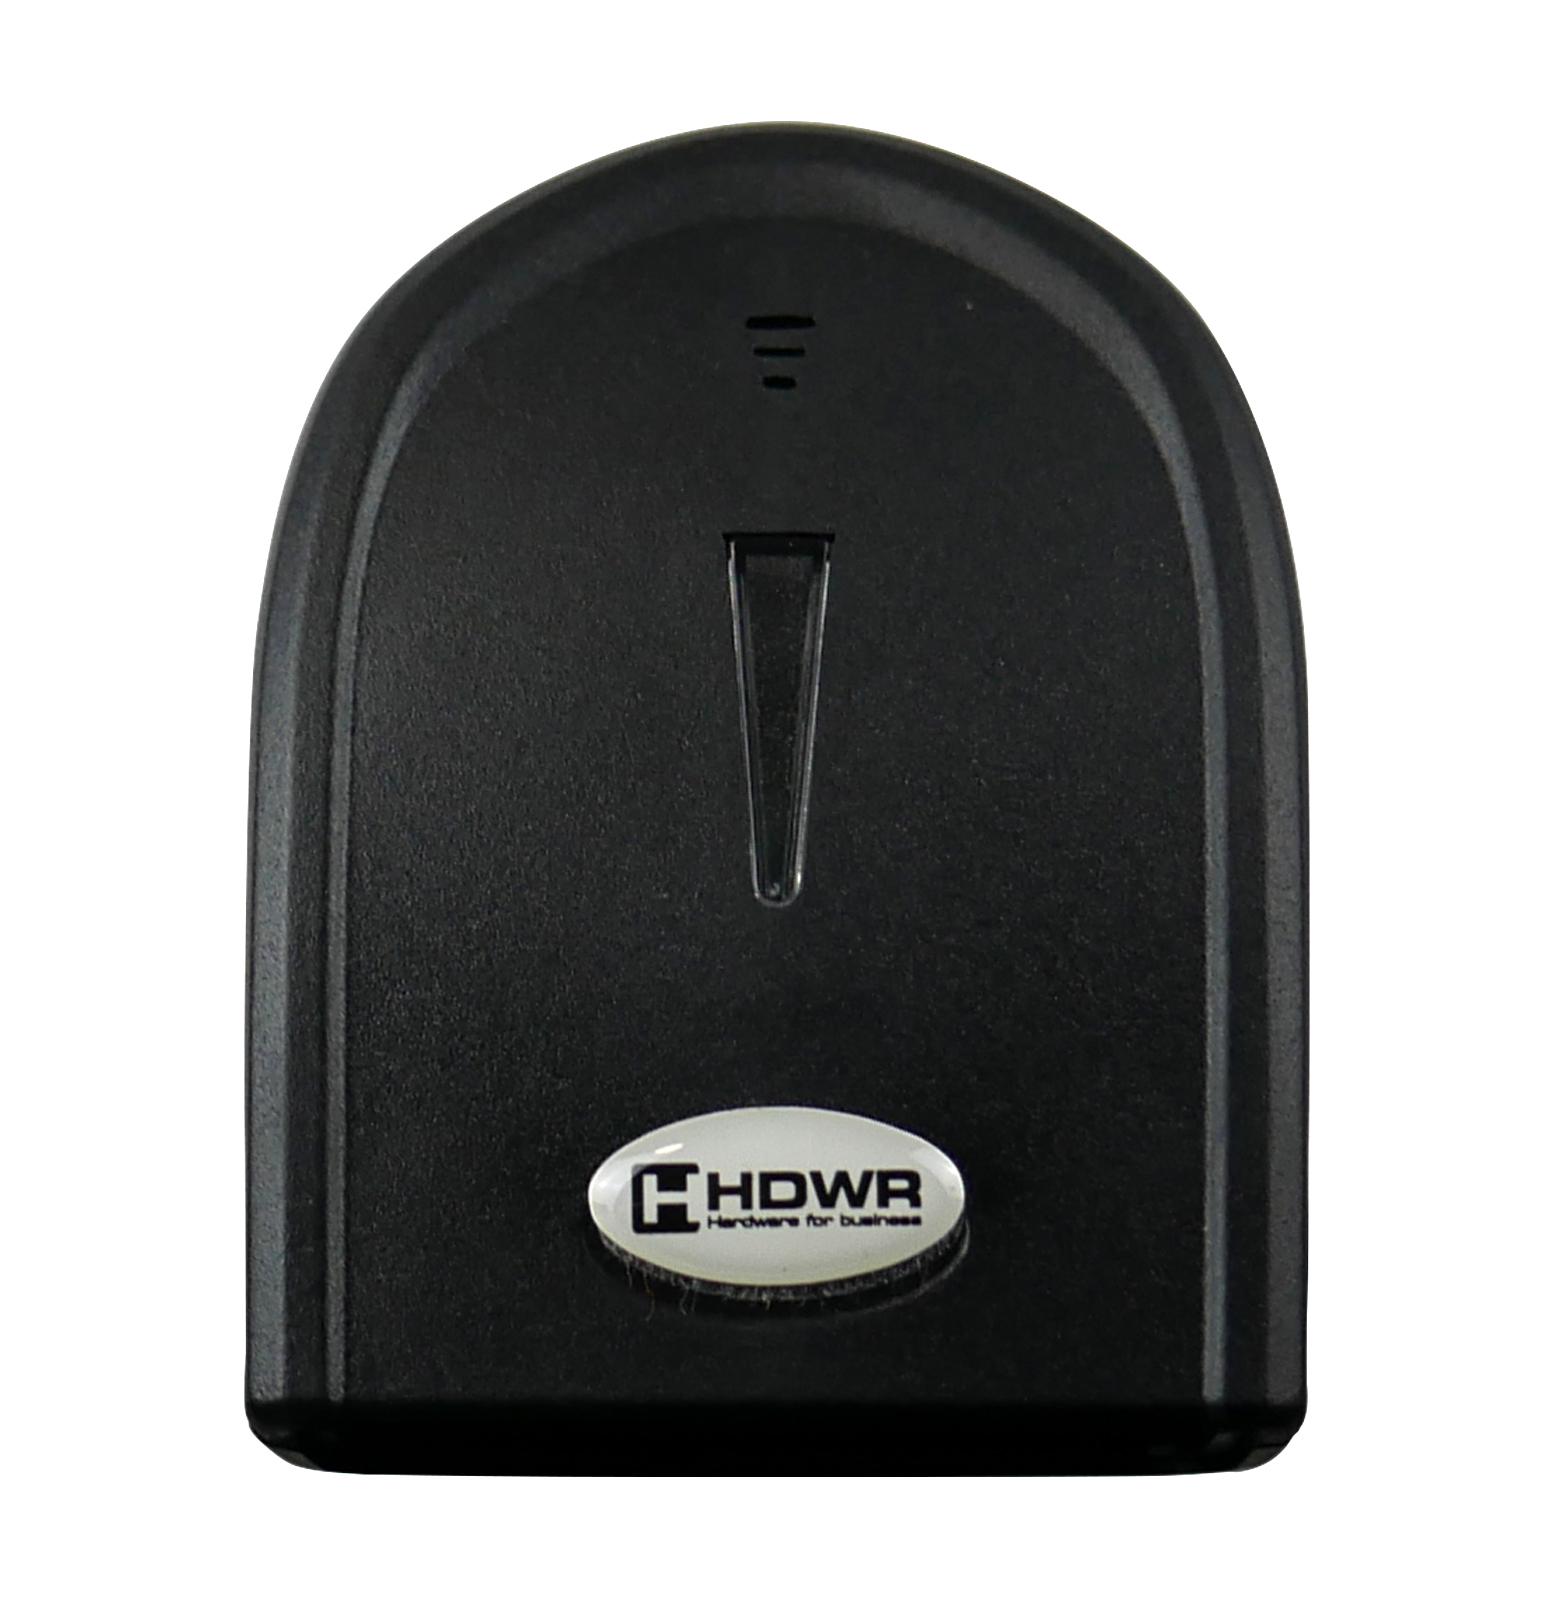 Warehouse scanner, barcodes, handheld HDWR HD26C